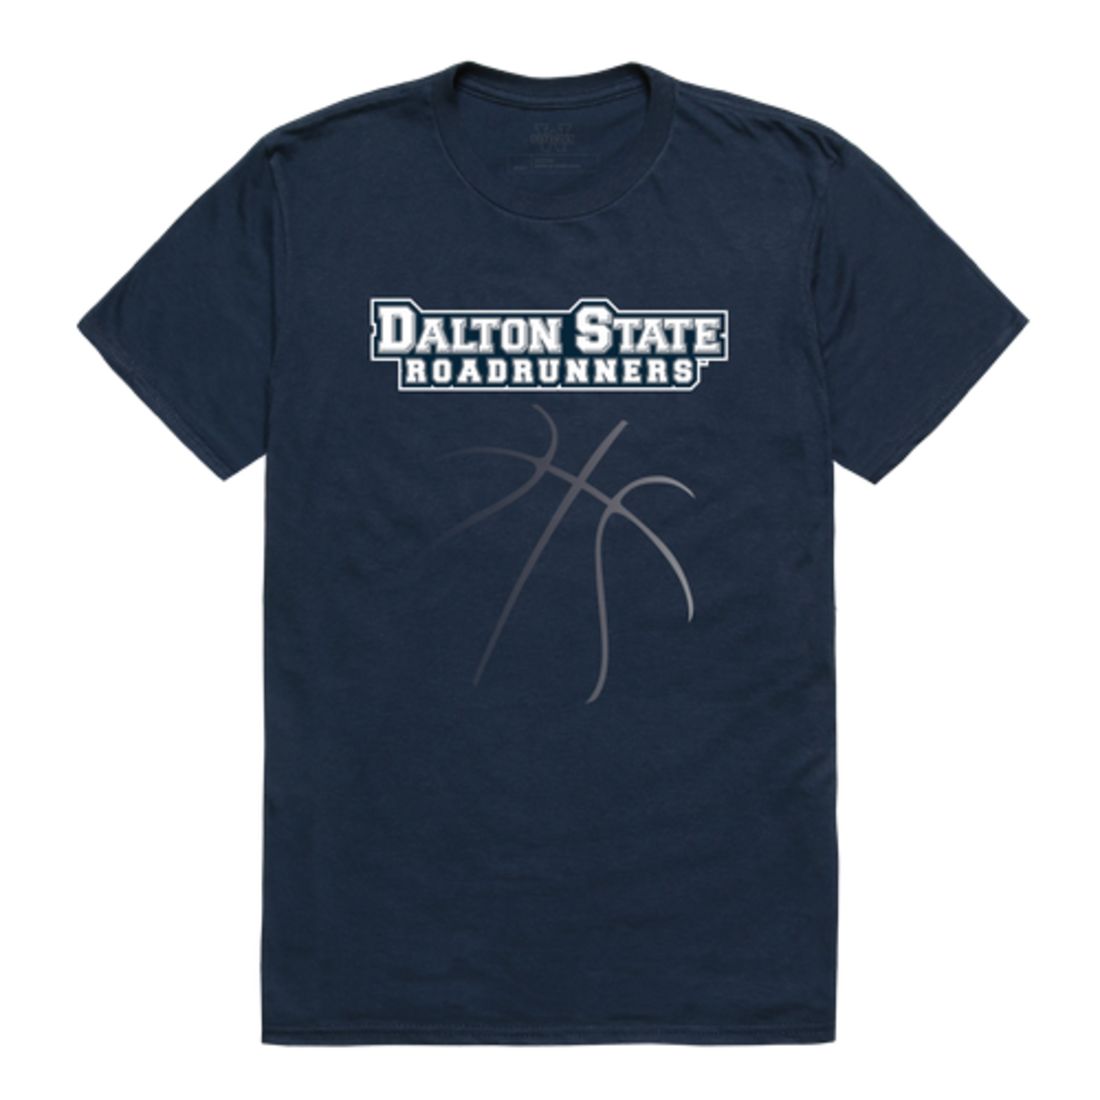 Dalton State College Roadrunners Basketball T-Shirt Tee